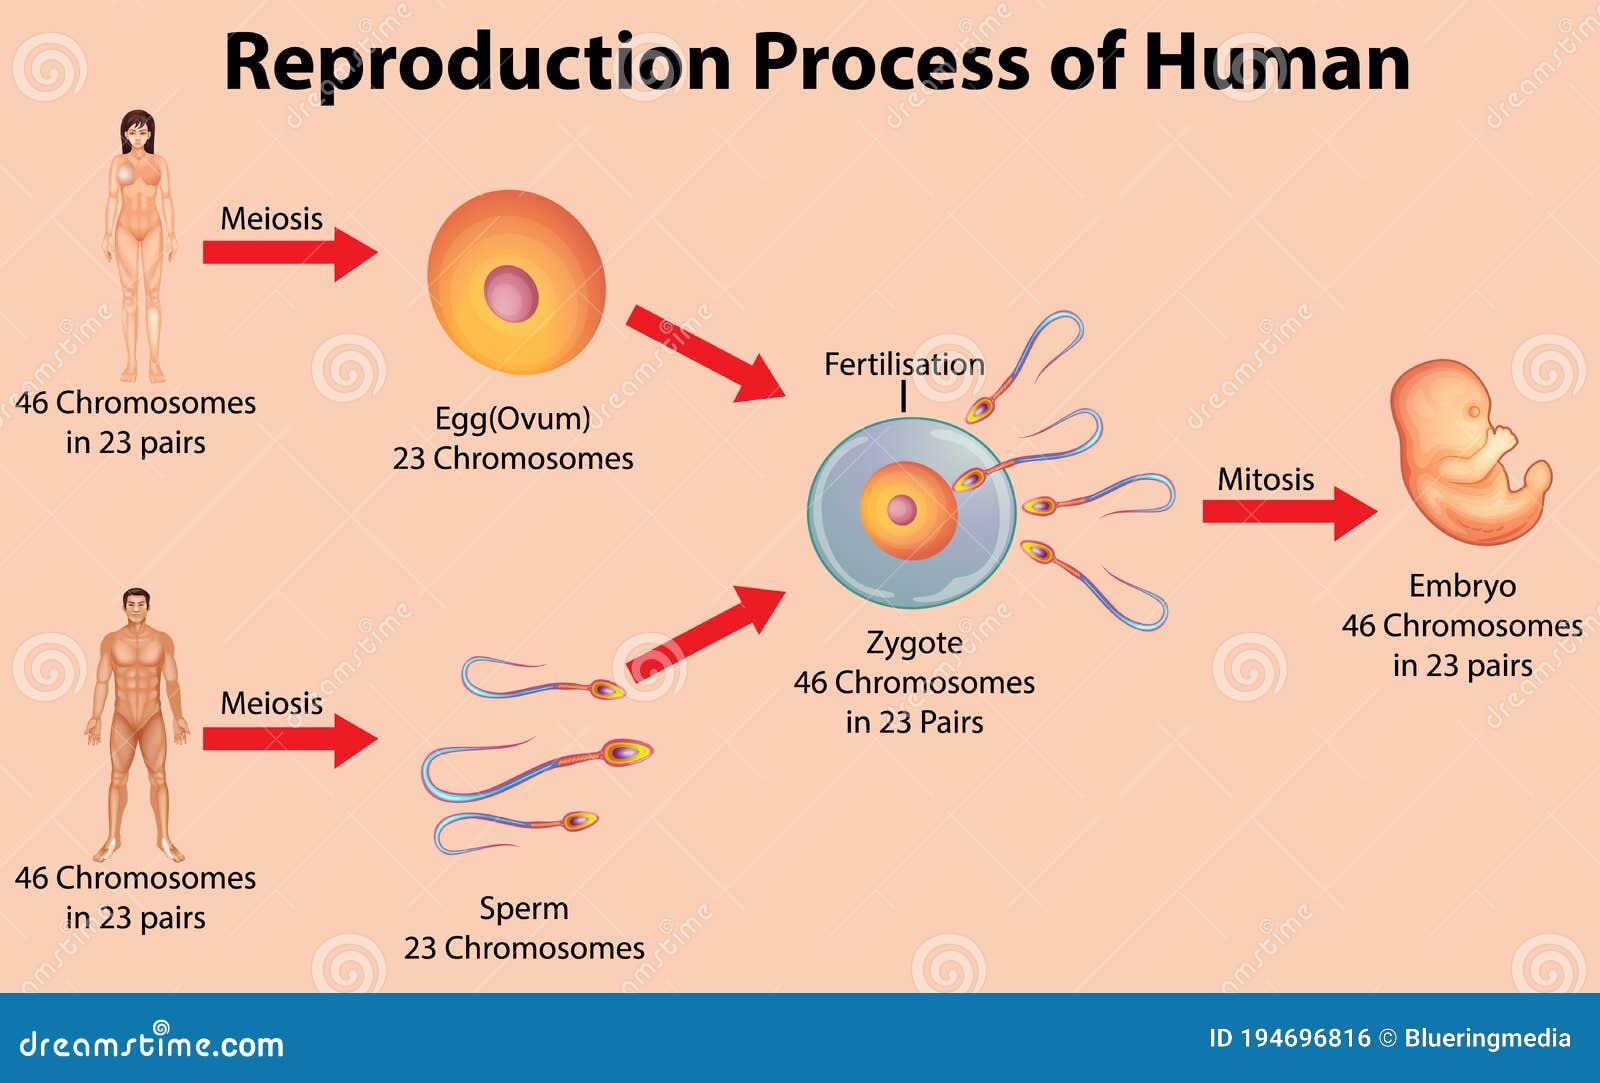 Production Process of Human